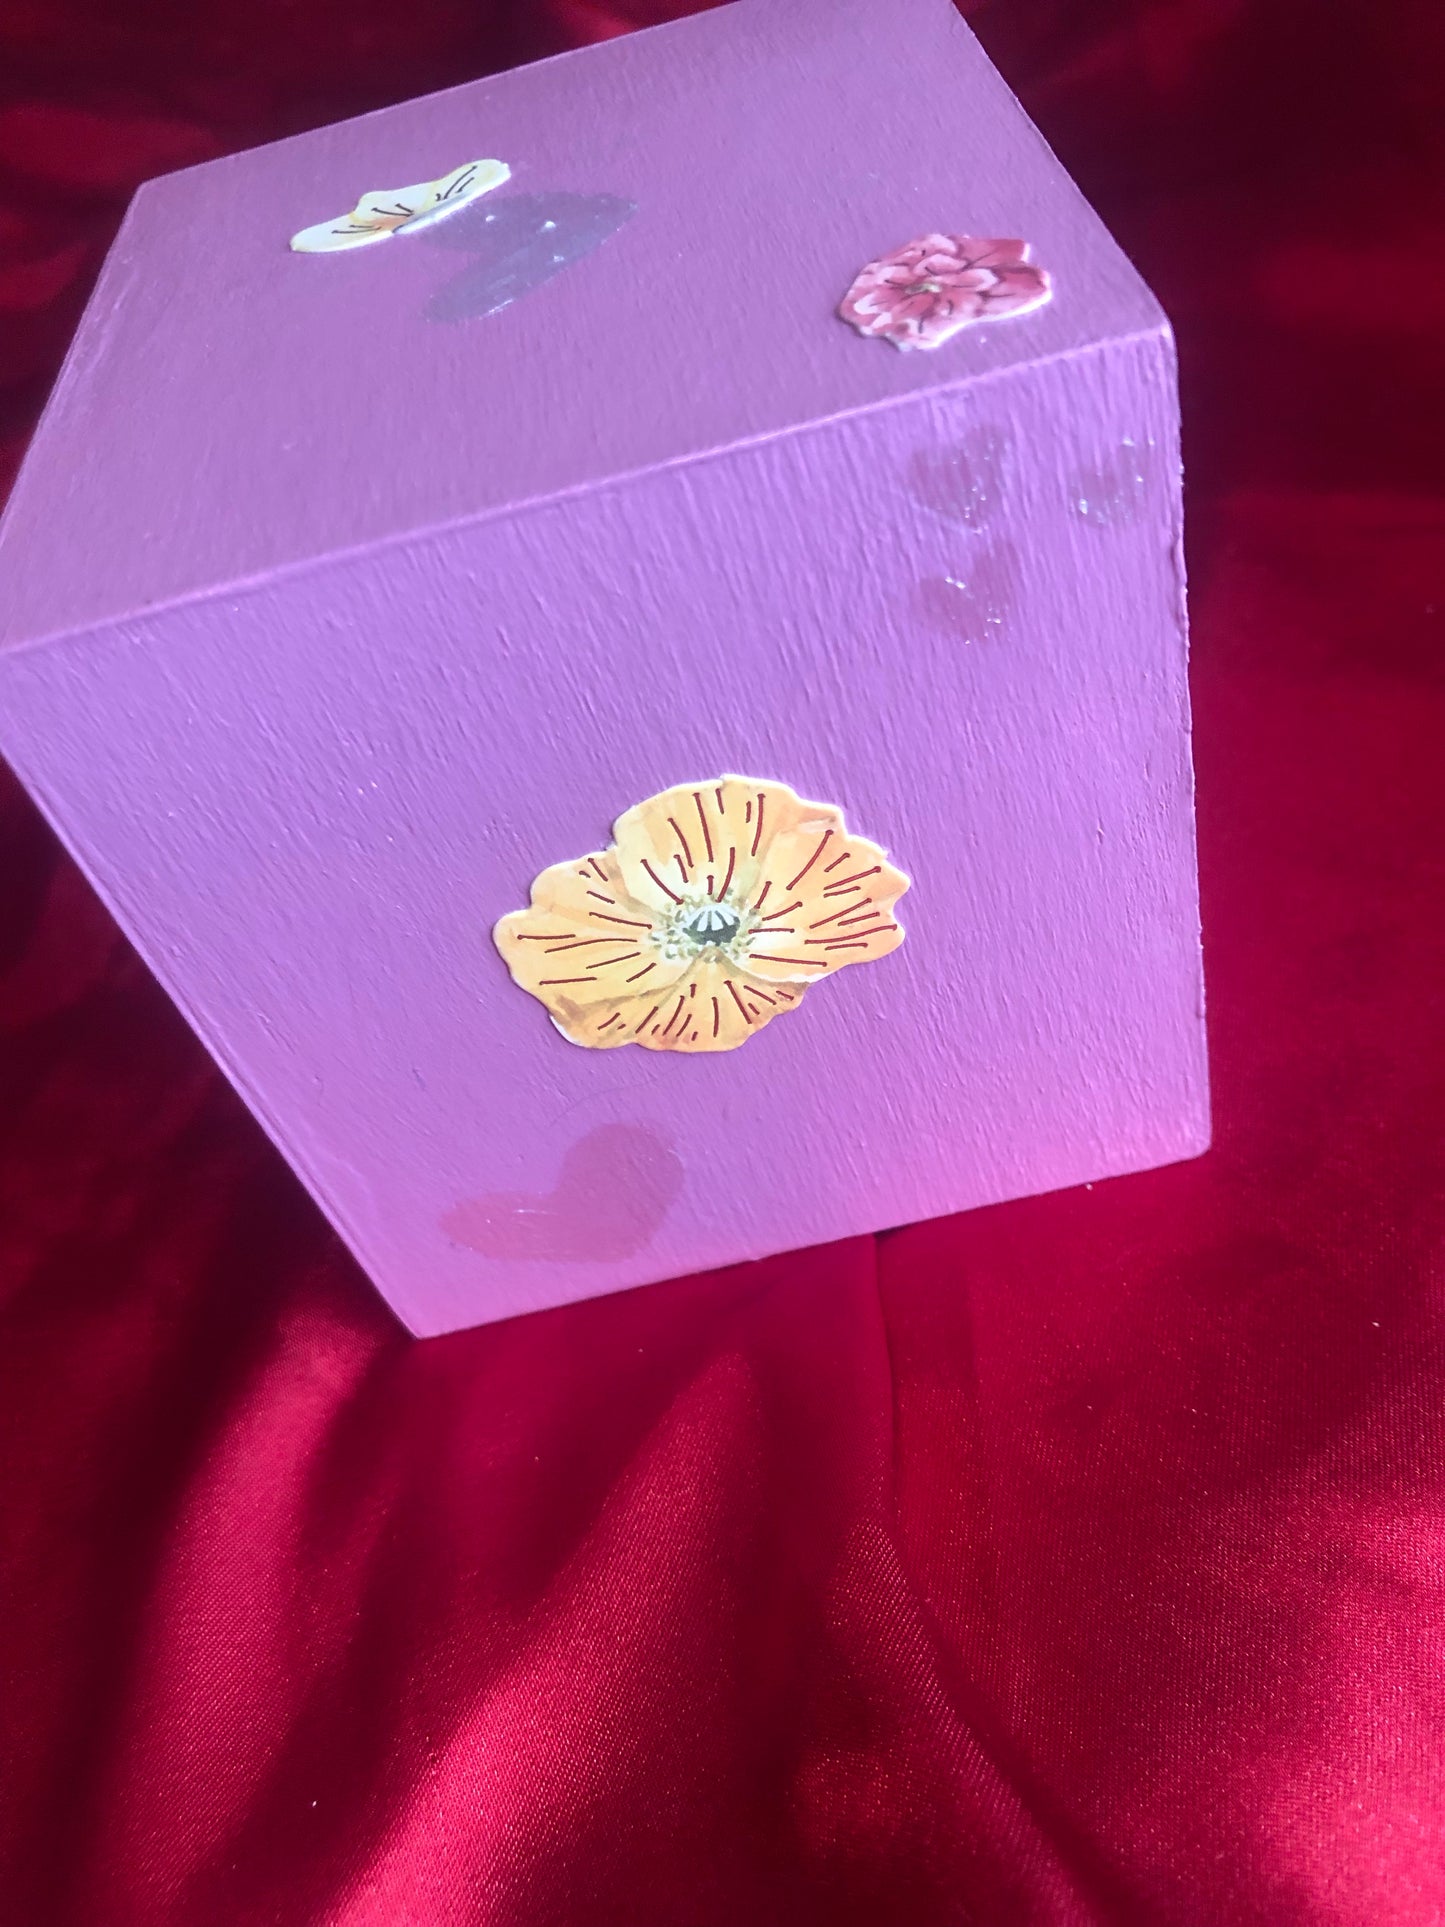 Sweethearts Box